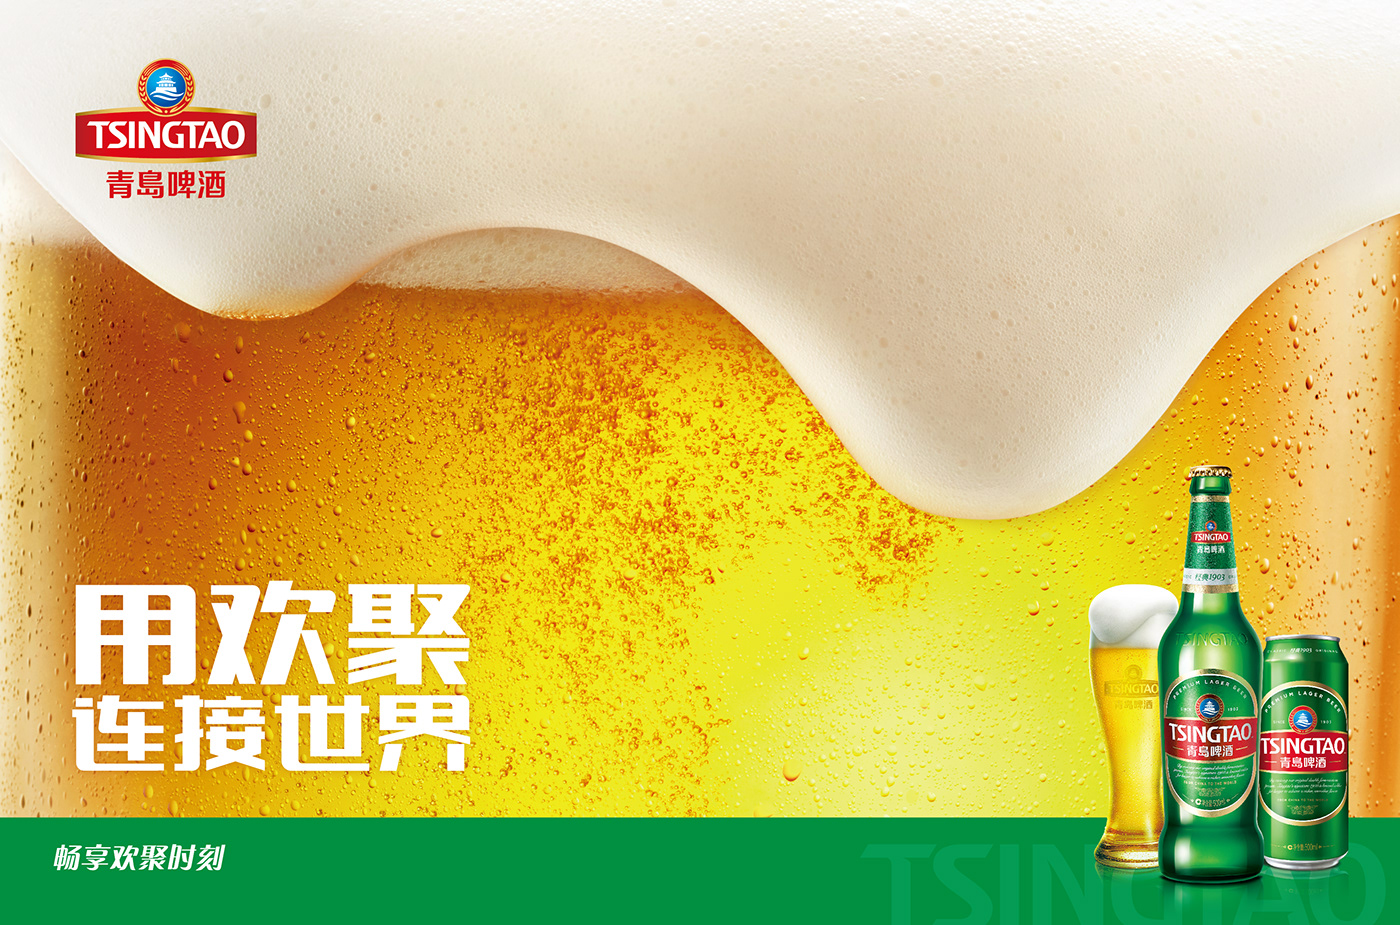 beer campaign china Foam havas shanghai summer together TsingTao world